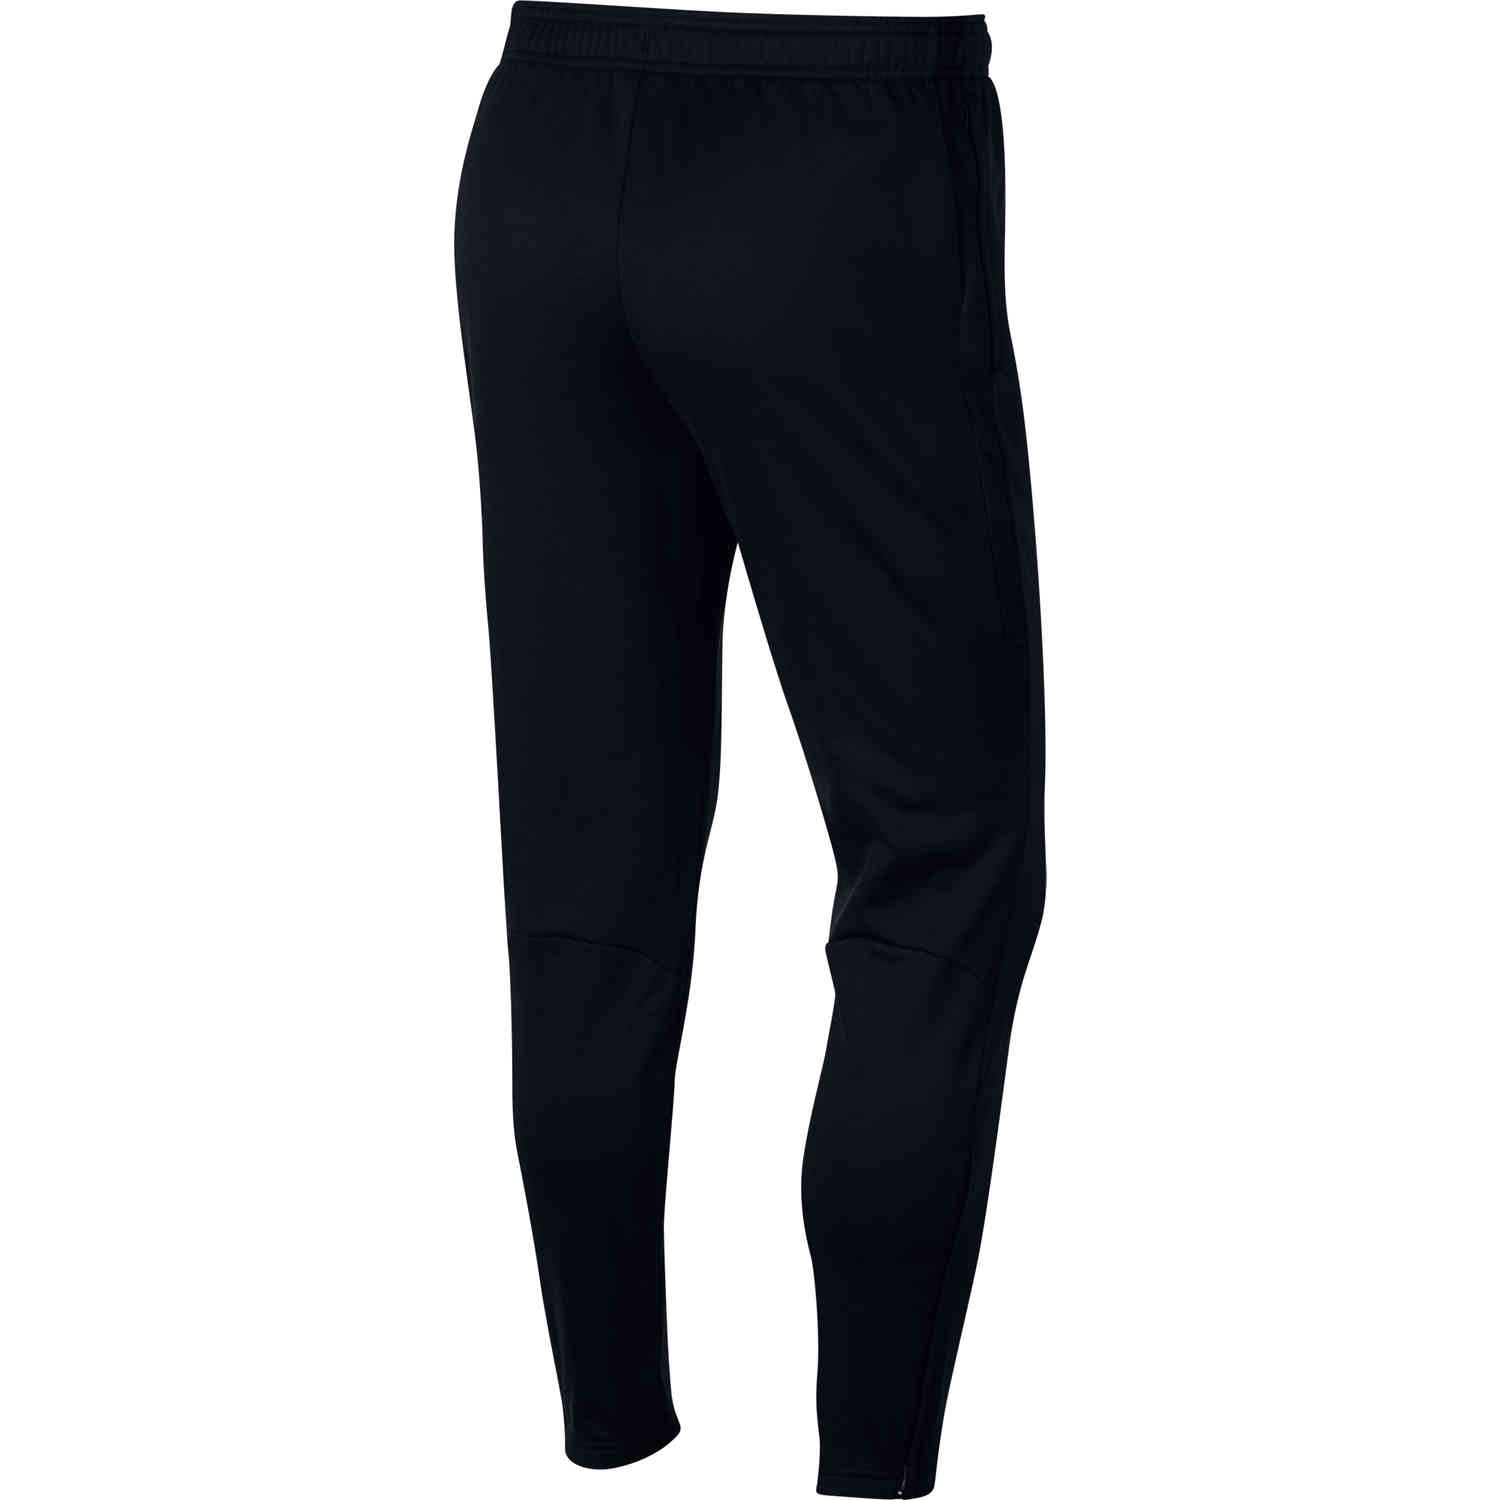 Nike Dry Academy Pants - Black - SoccerPro